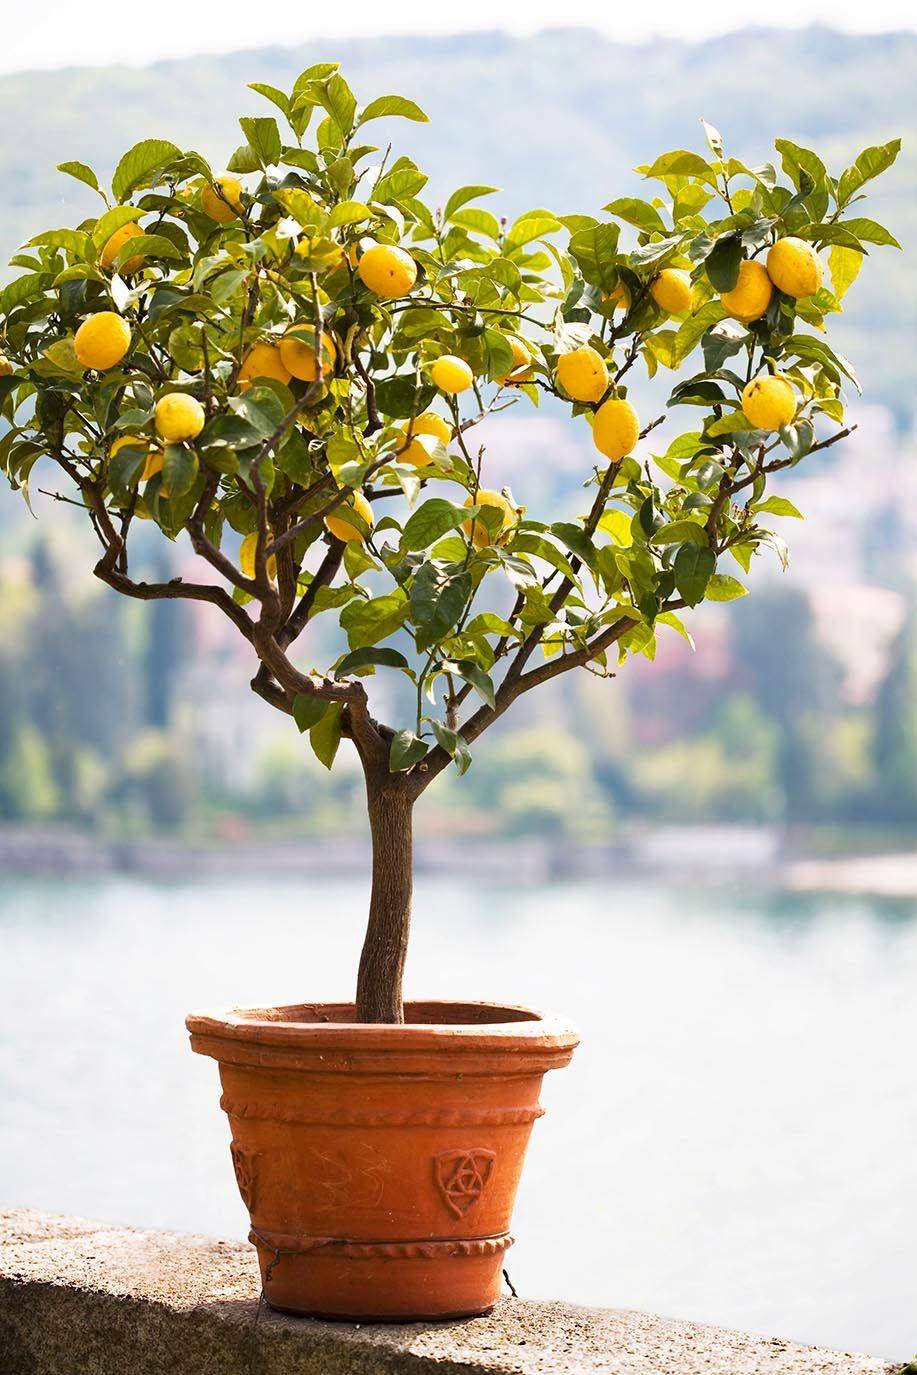 Описание лимона сорта лунарио и особенности ухода в домашних условиях